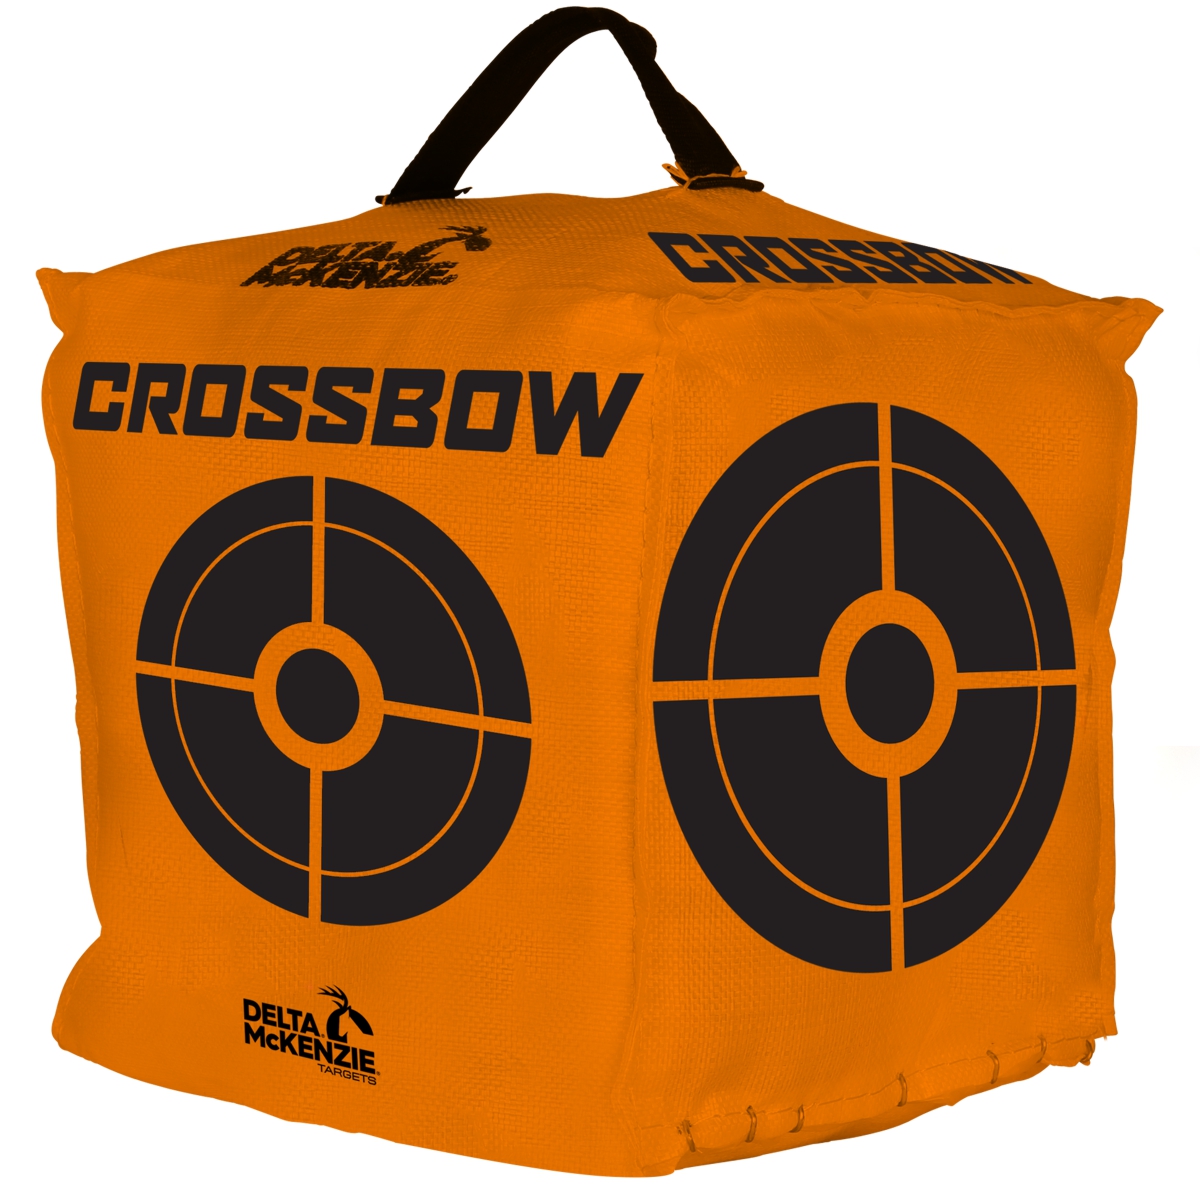 Delta McKenzie - Crossbow Bag